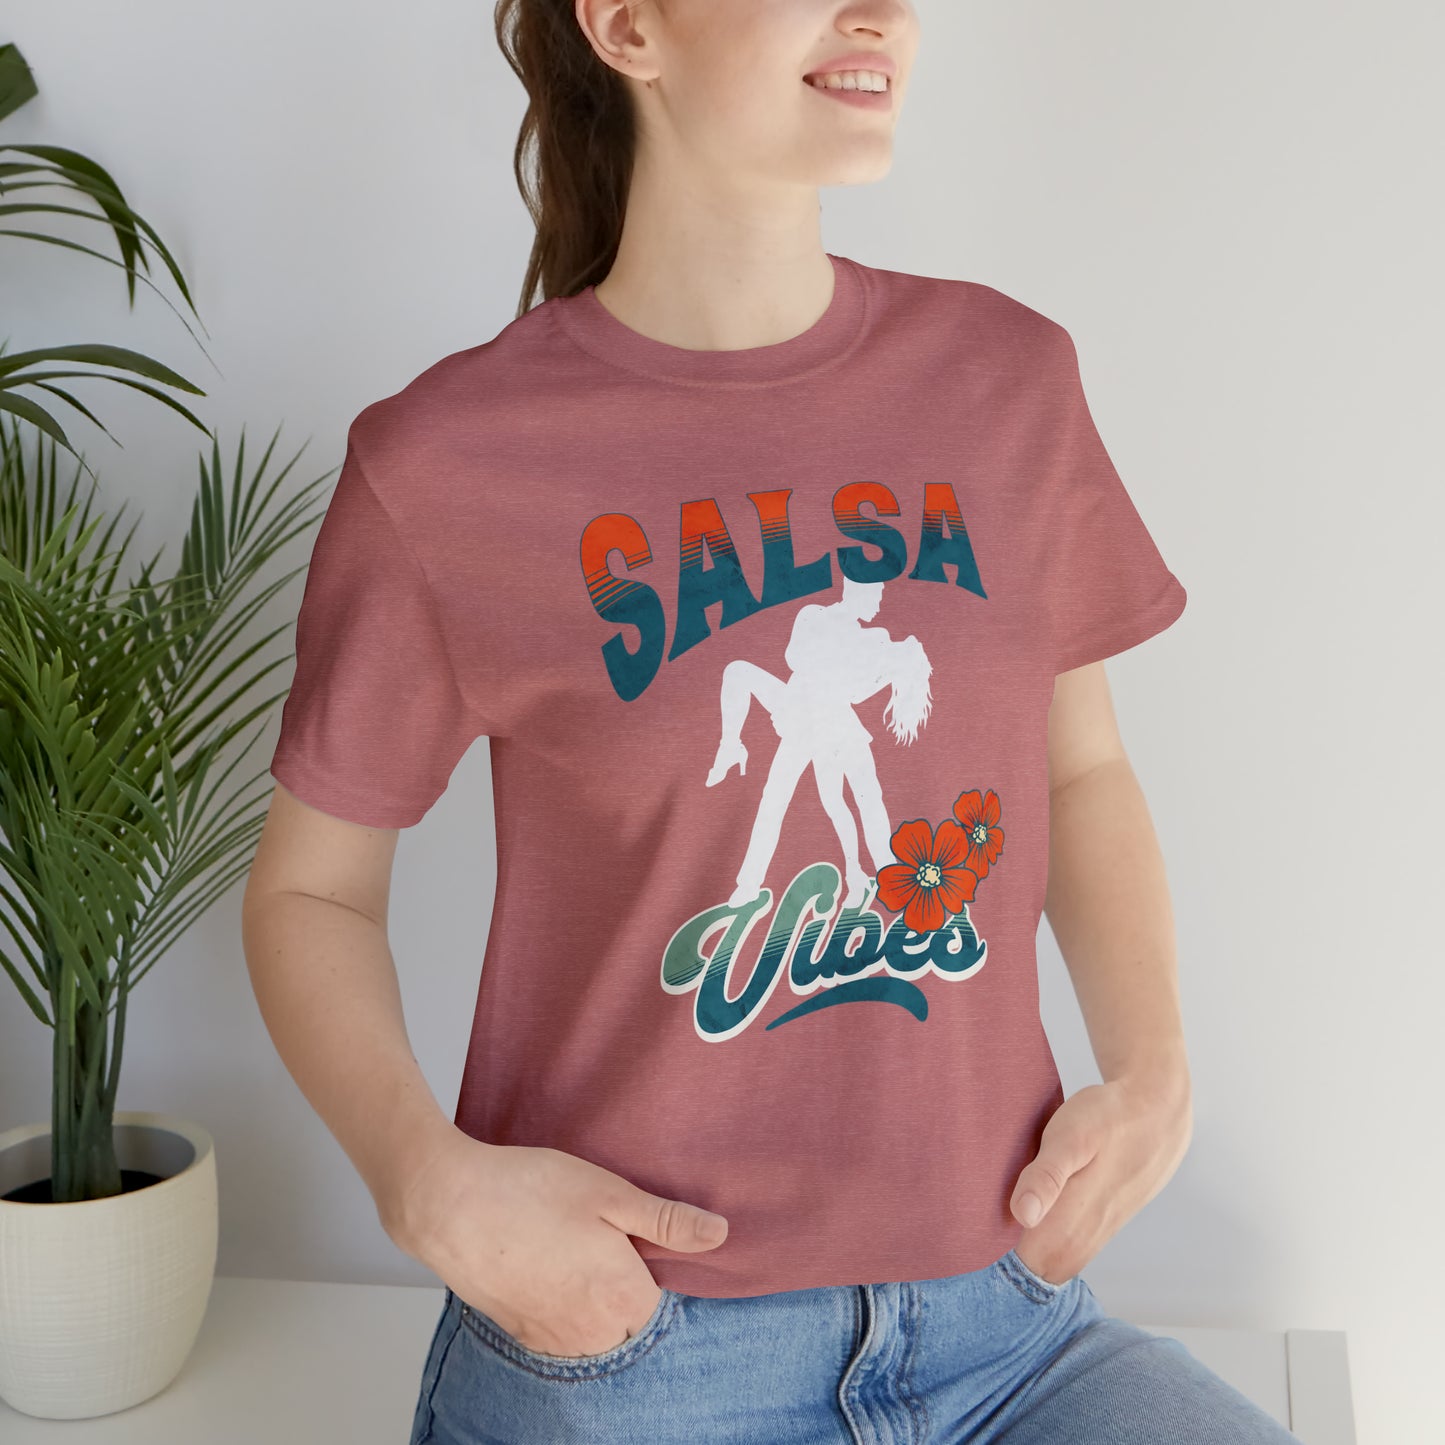 Salsa1